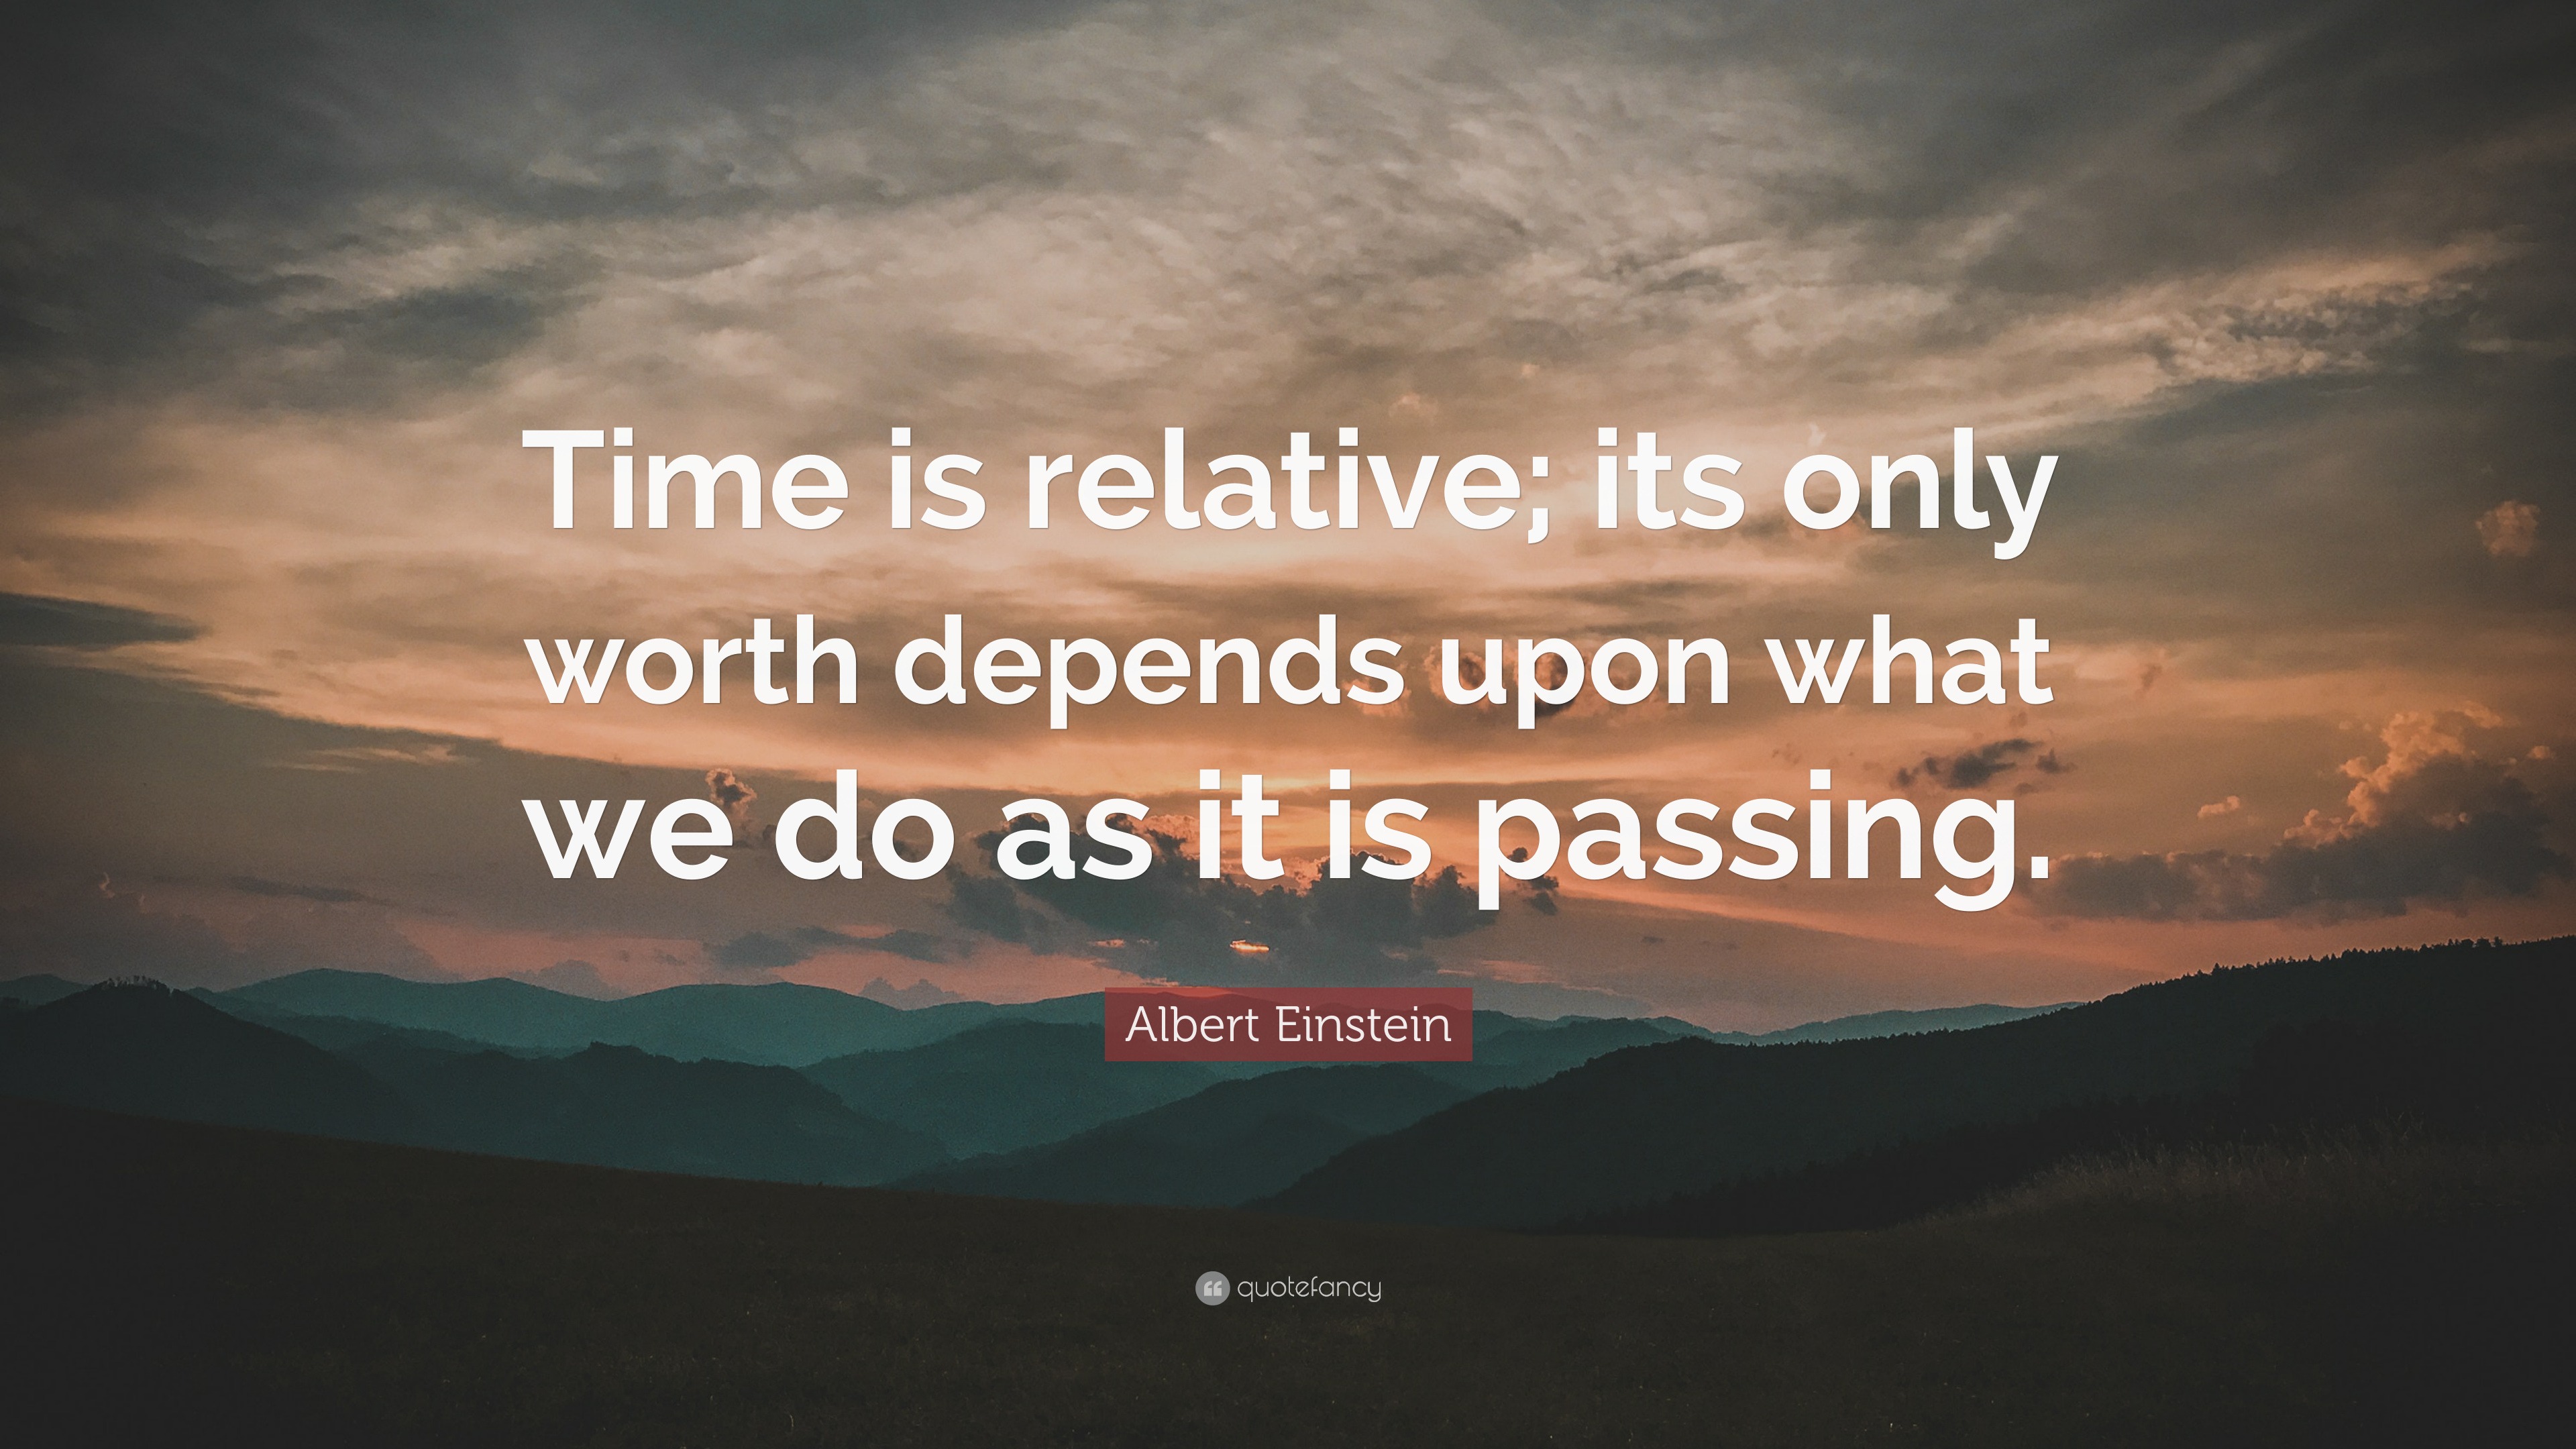 Time Is Relative Einstein Quote - Kumpulan quote kata bijak